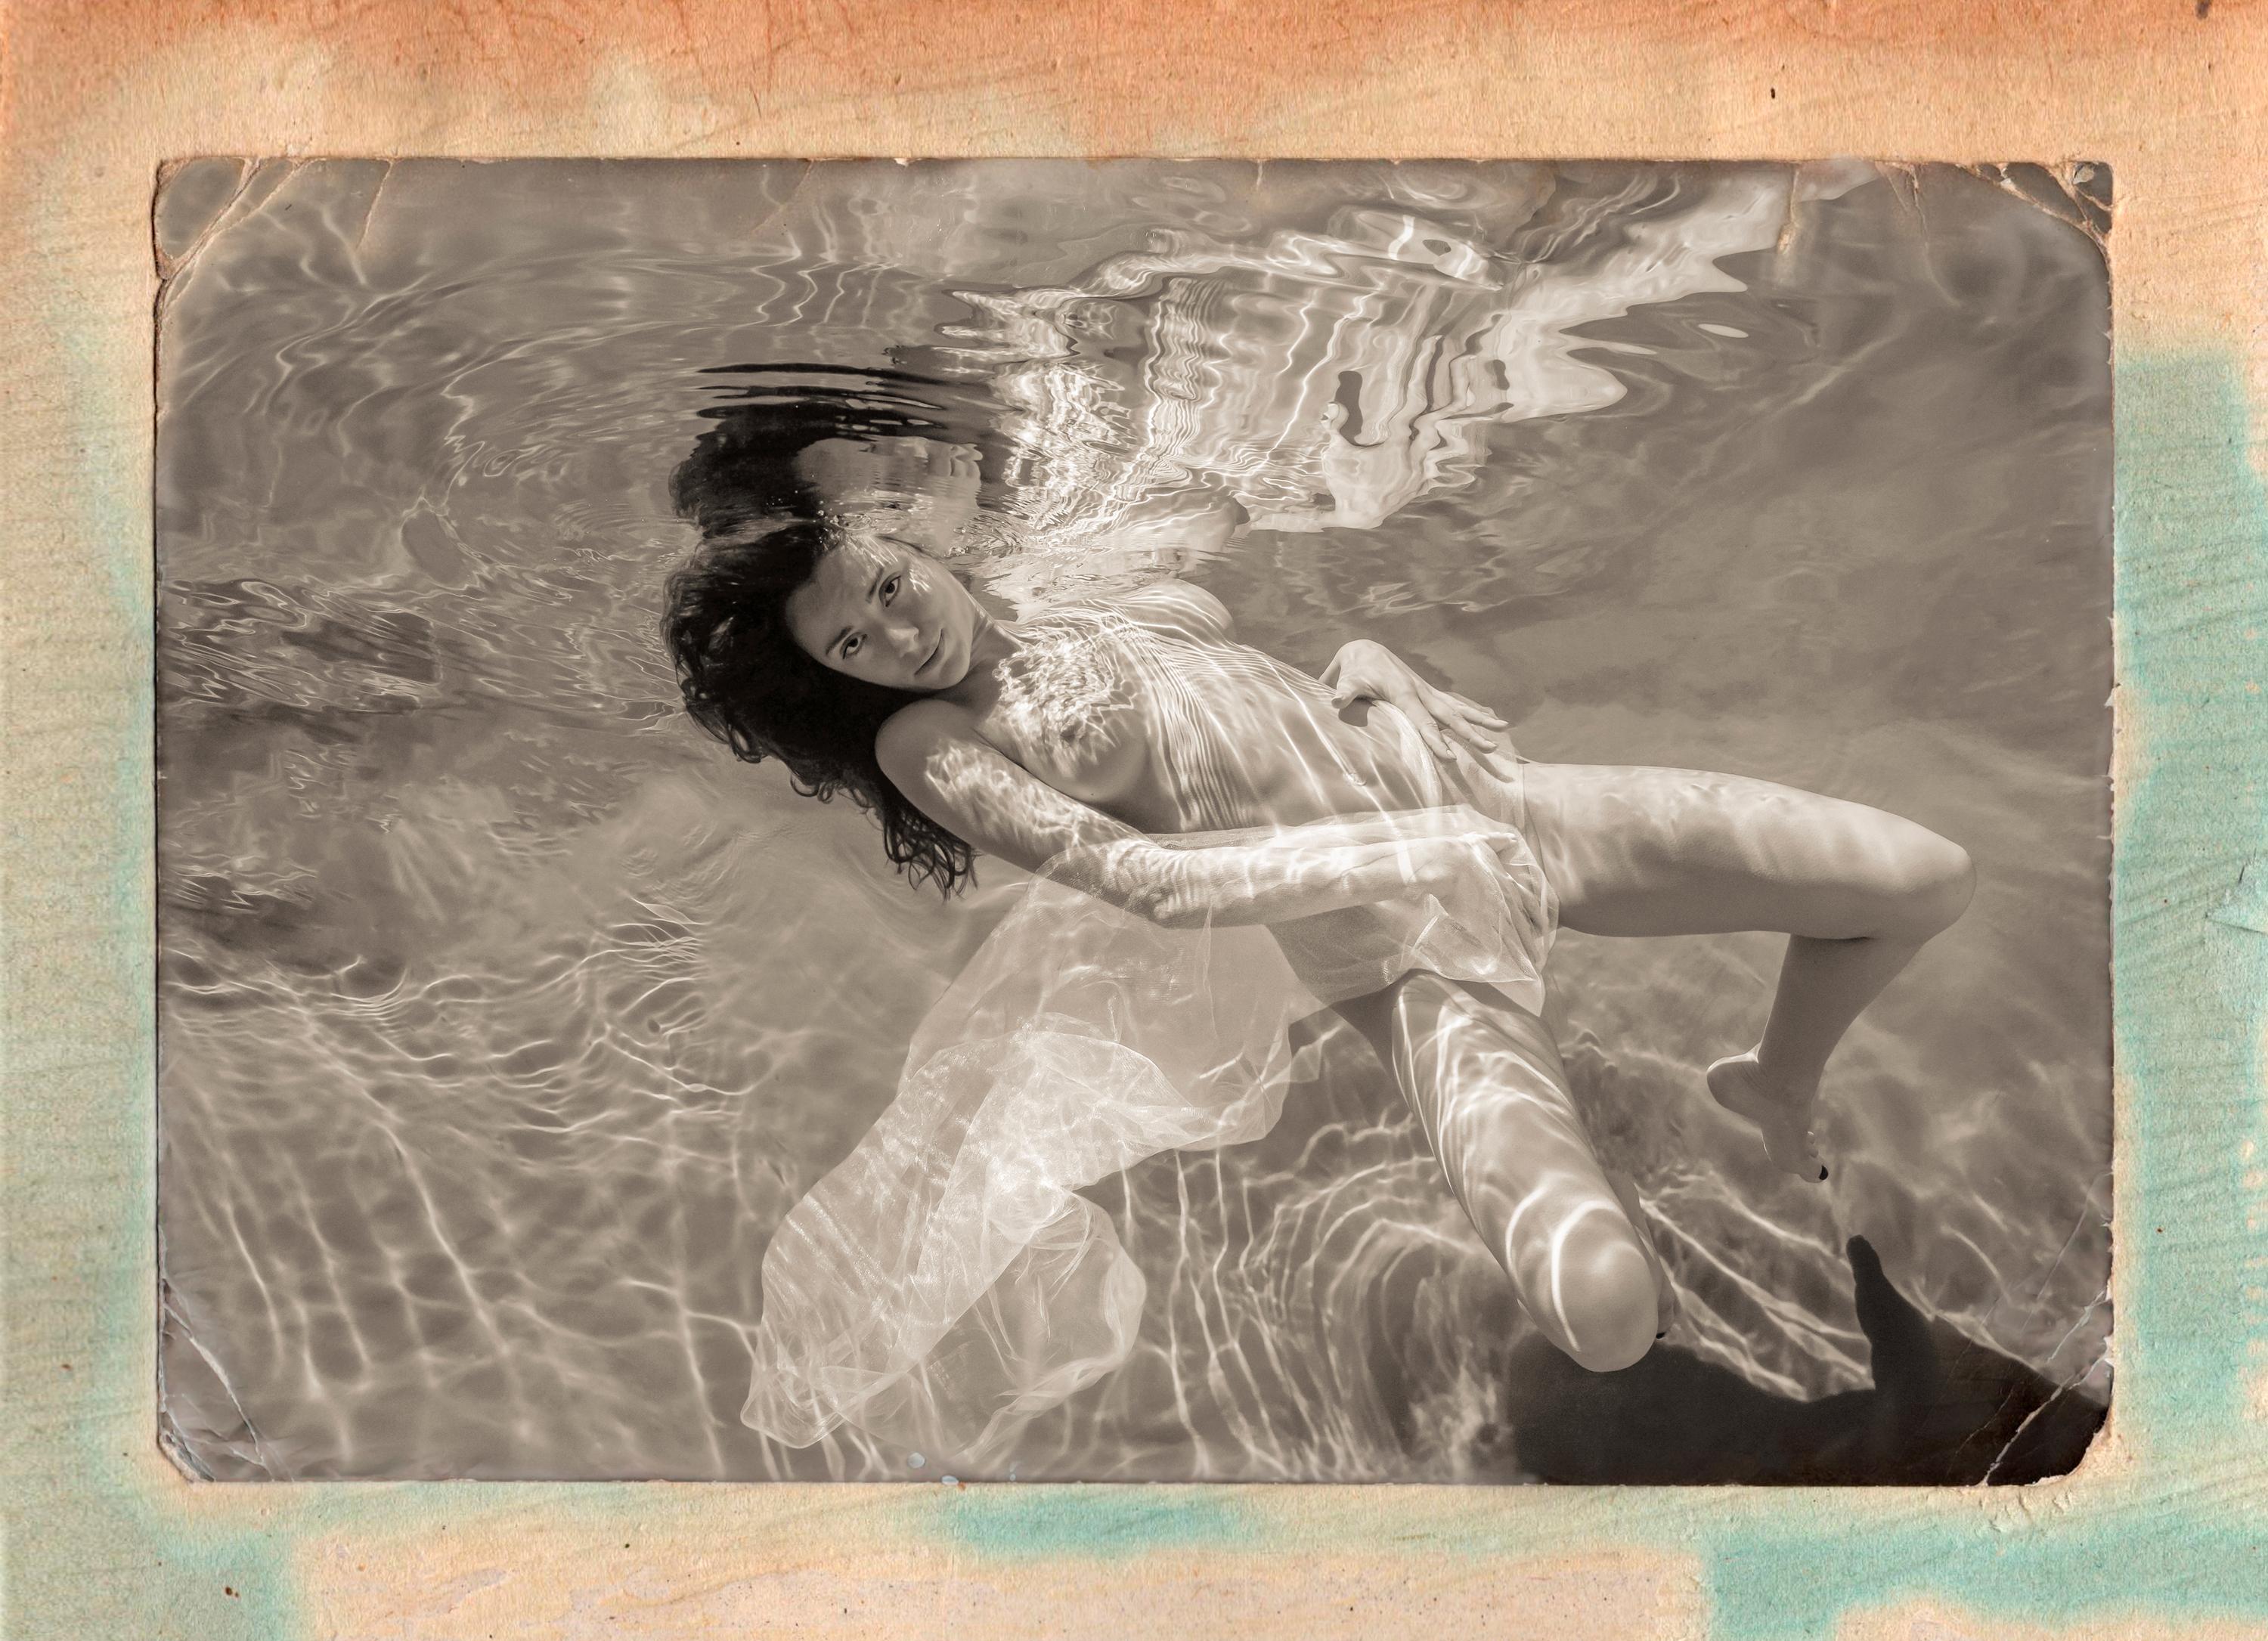 Old Album - underwater nude photograph - archival pigment print